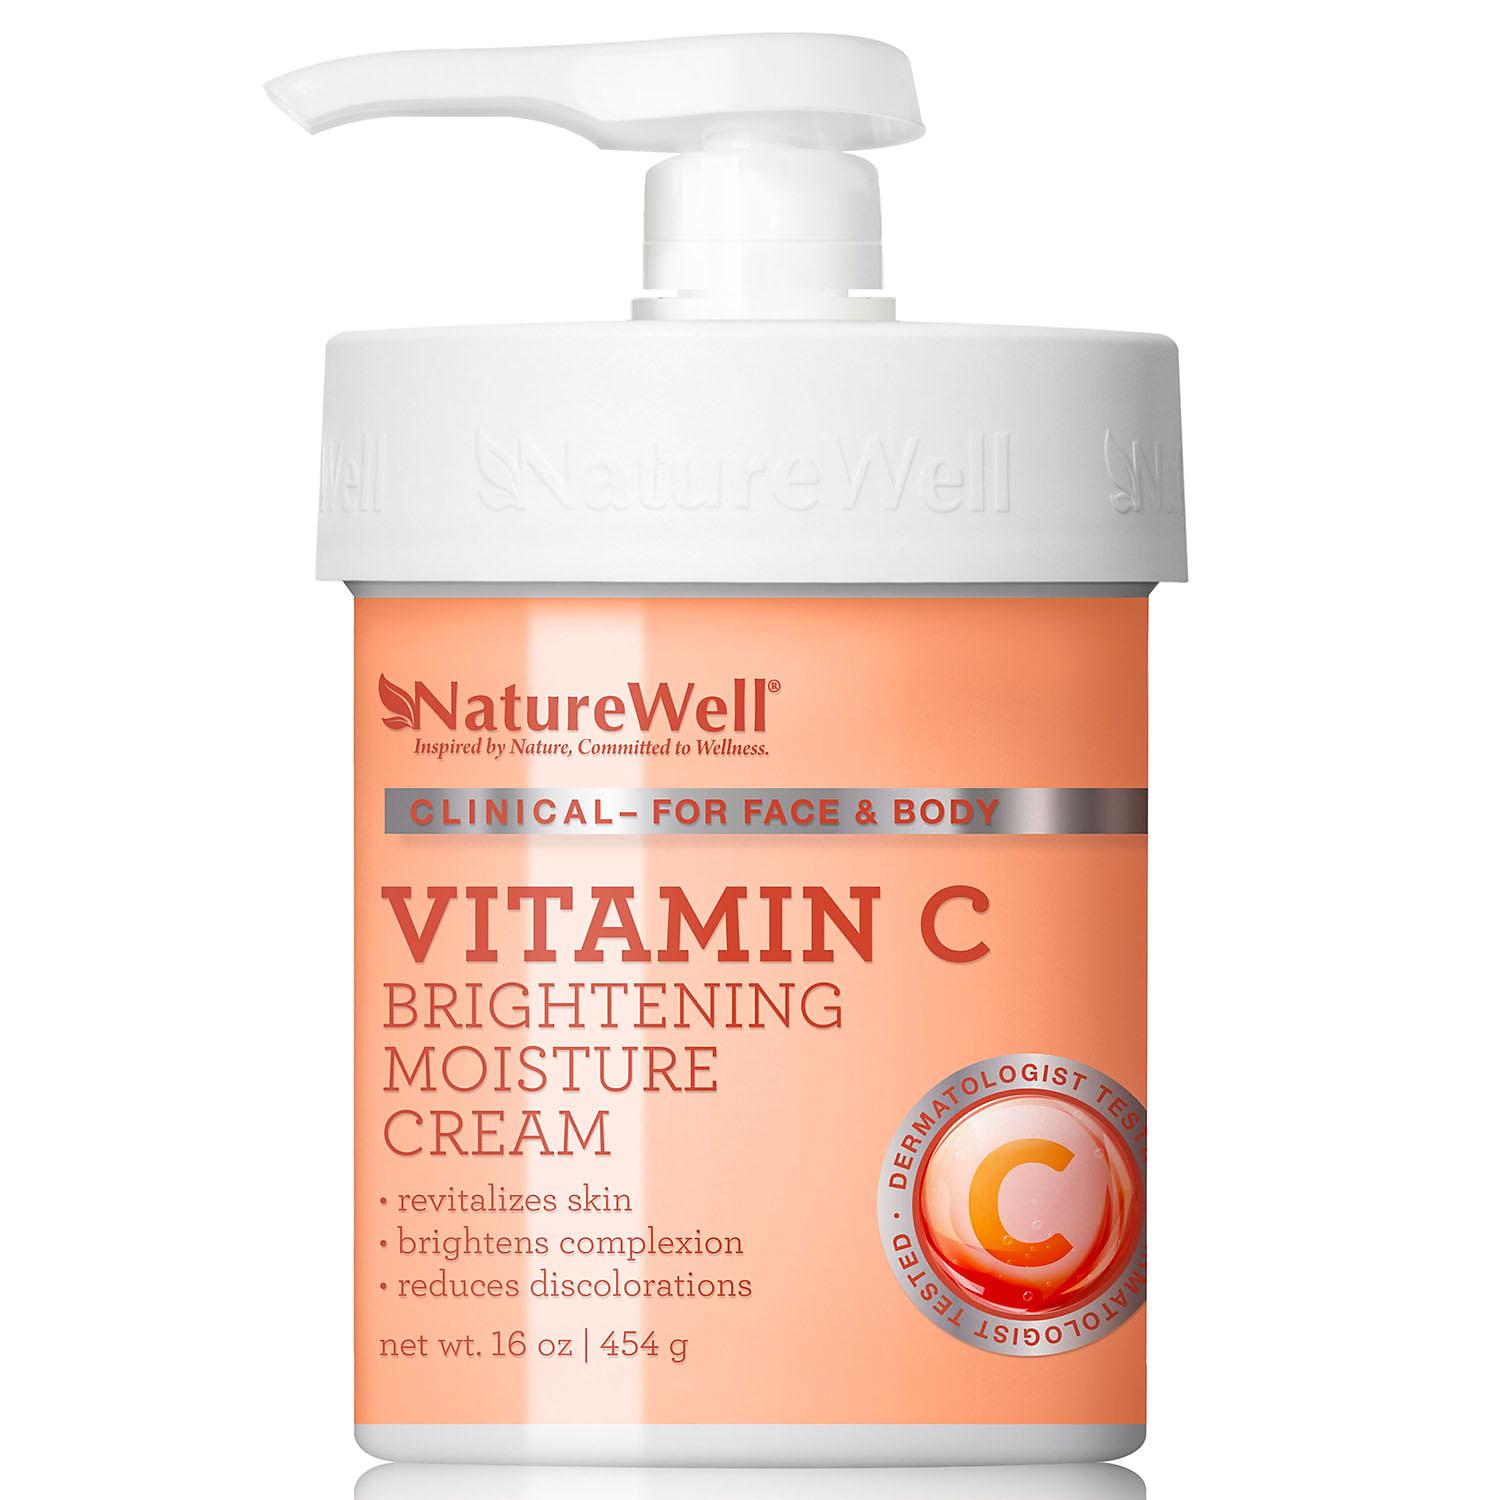 NatureWell Vitamin C Brightening Moisture Cream (16 oz.) - image 1 of 3